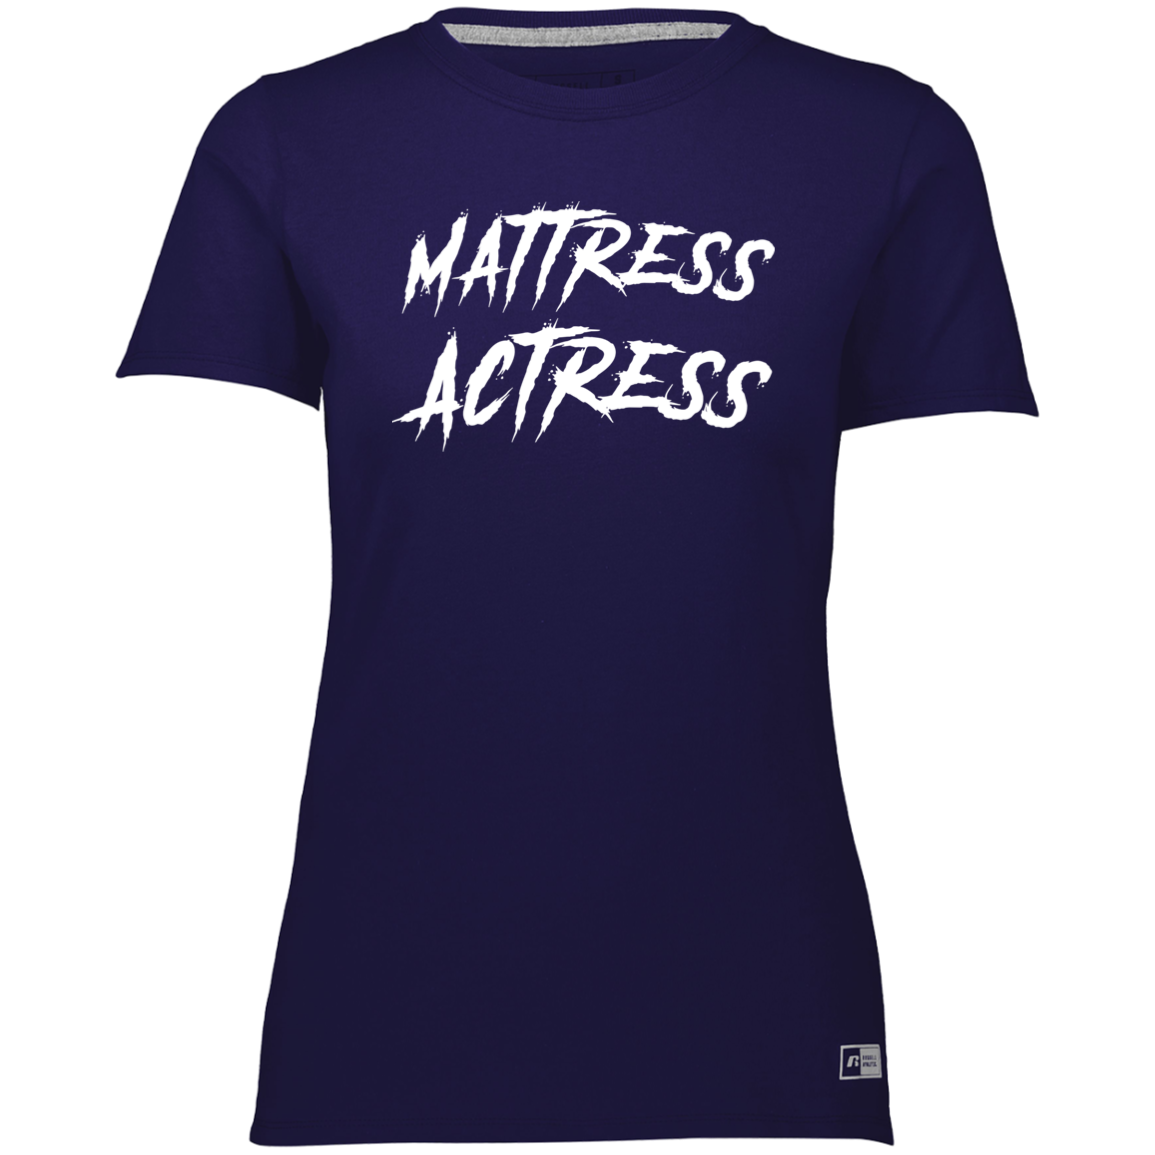 "Mattress Actress" Ladies’ Essential Dri-Power Tee